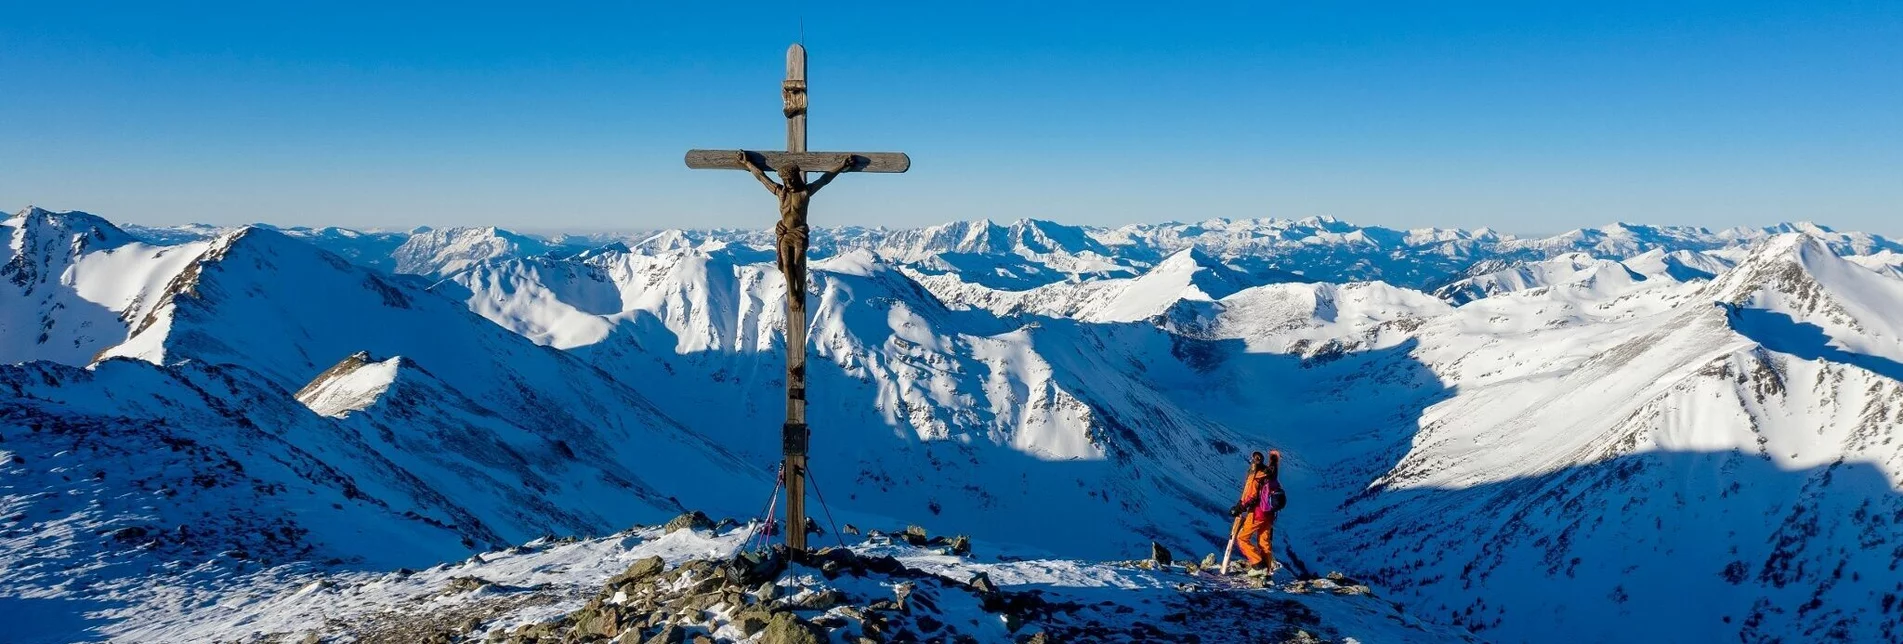 Skitour Greim - Touren-Impression #1 | © Tourismusverband Region Murau